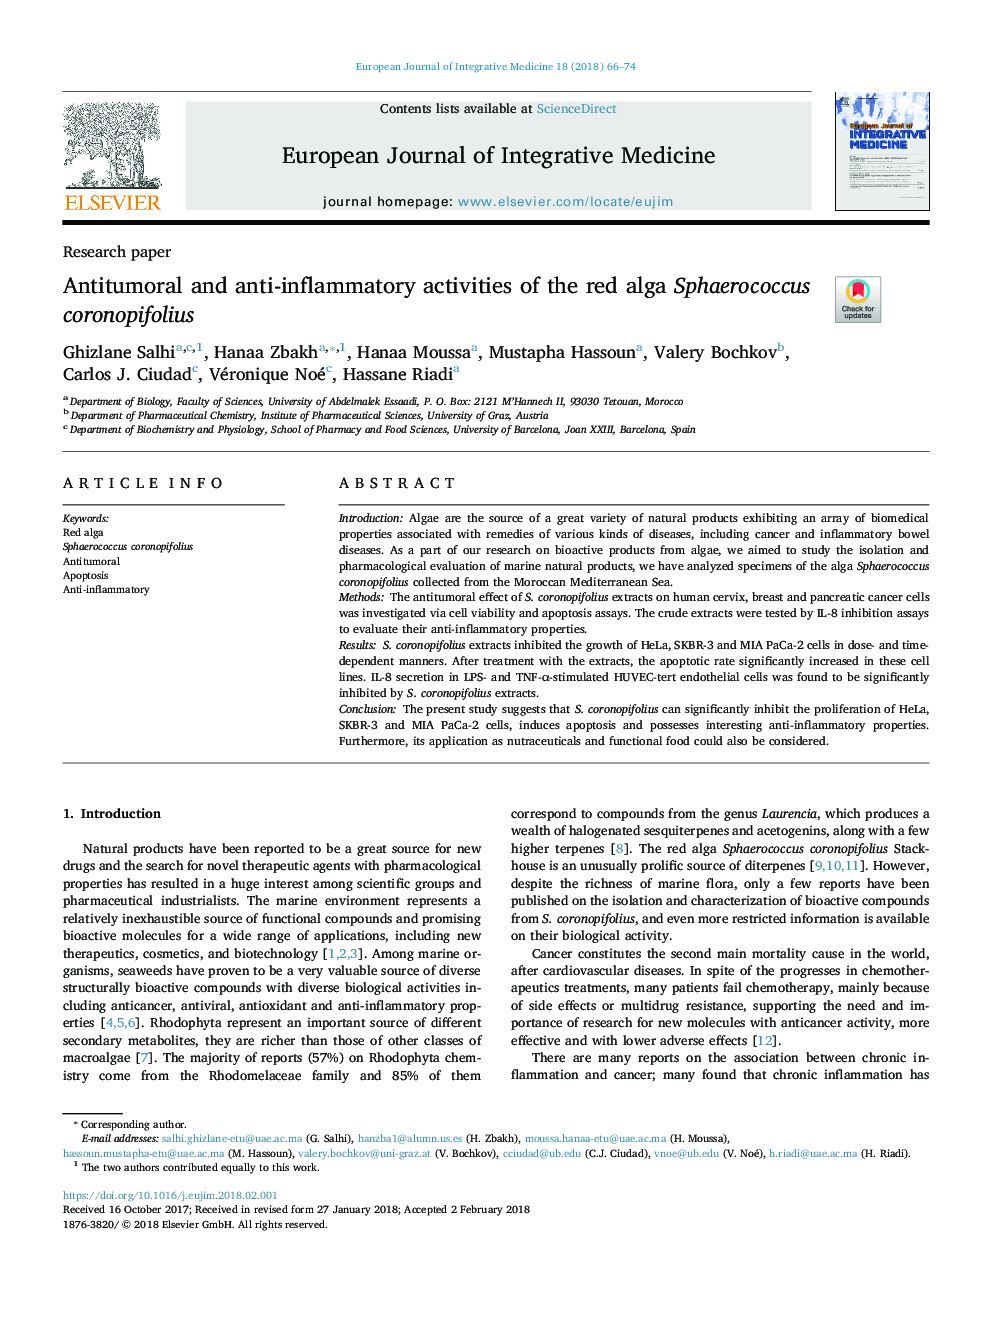 Antitumoral and anti-inflammatory activities of the red alga Sphaerococcus coronopifolius